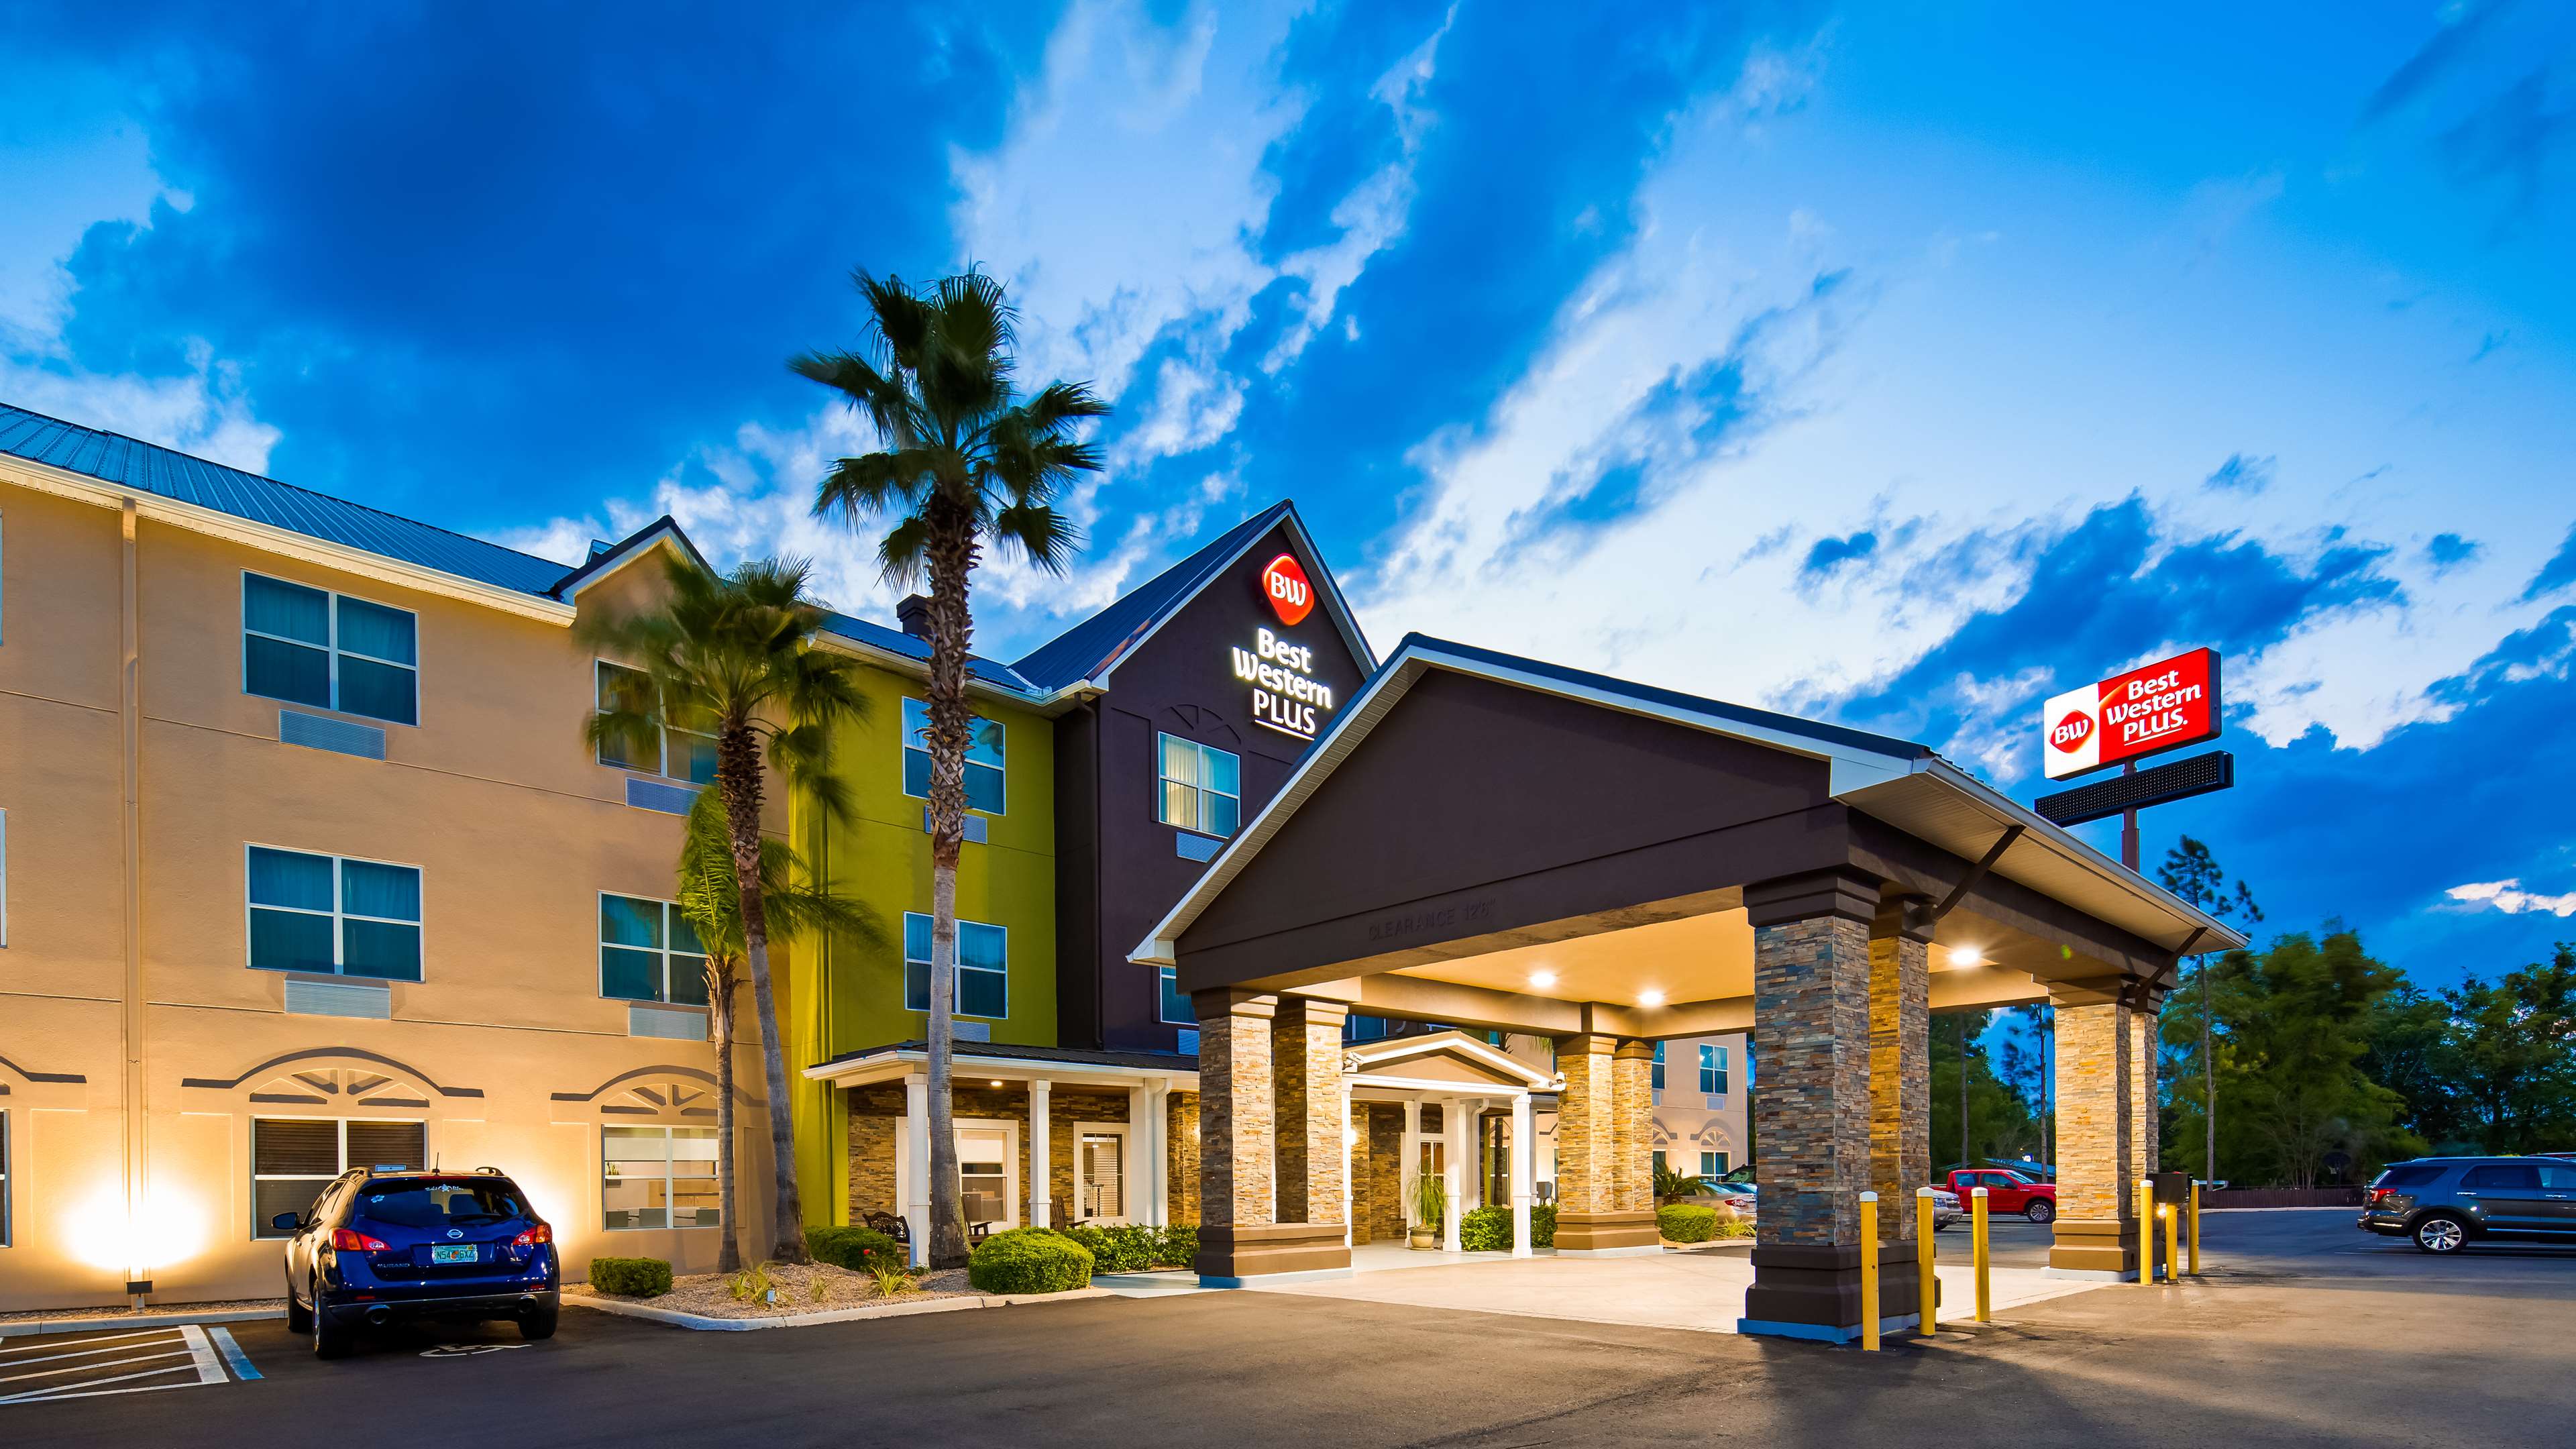 Lake city hotel rodeway inn fl florida columbia lodging county